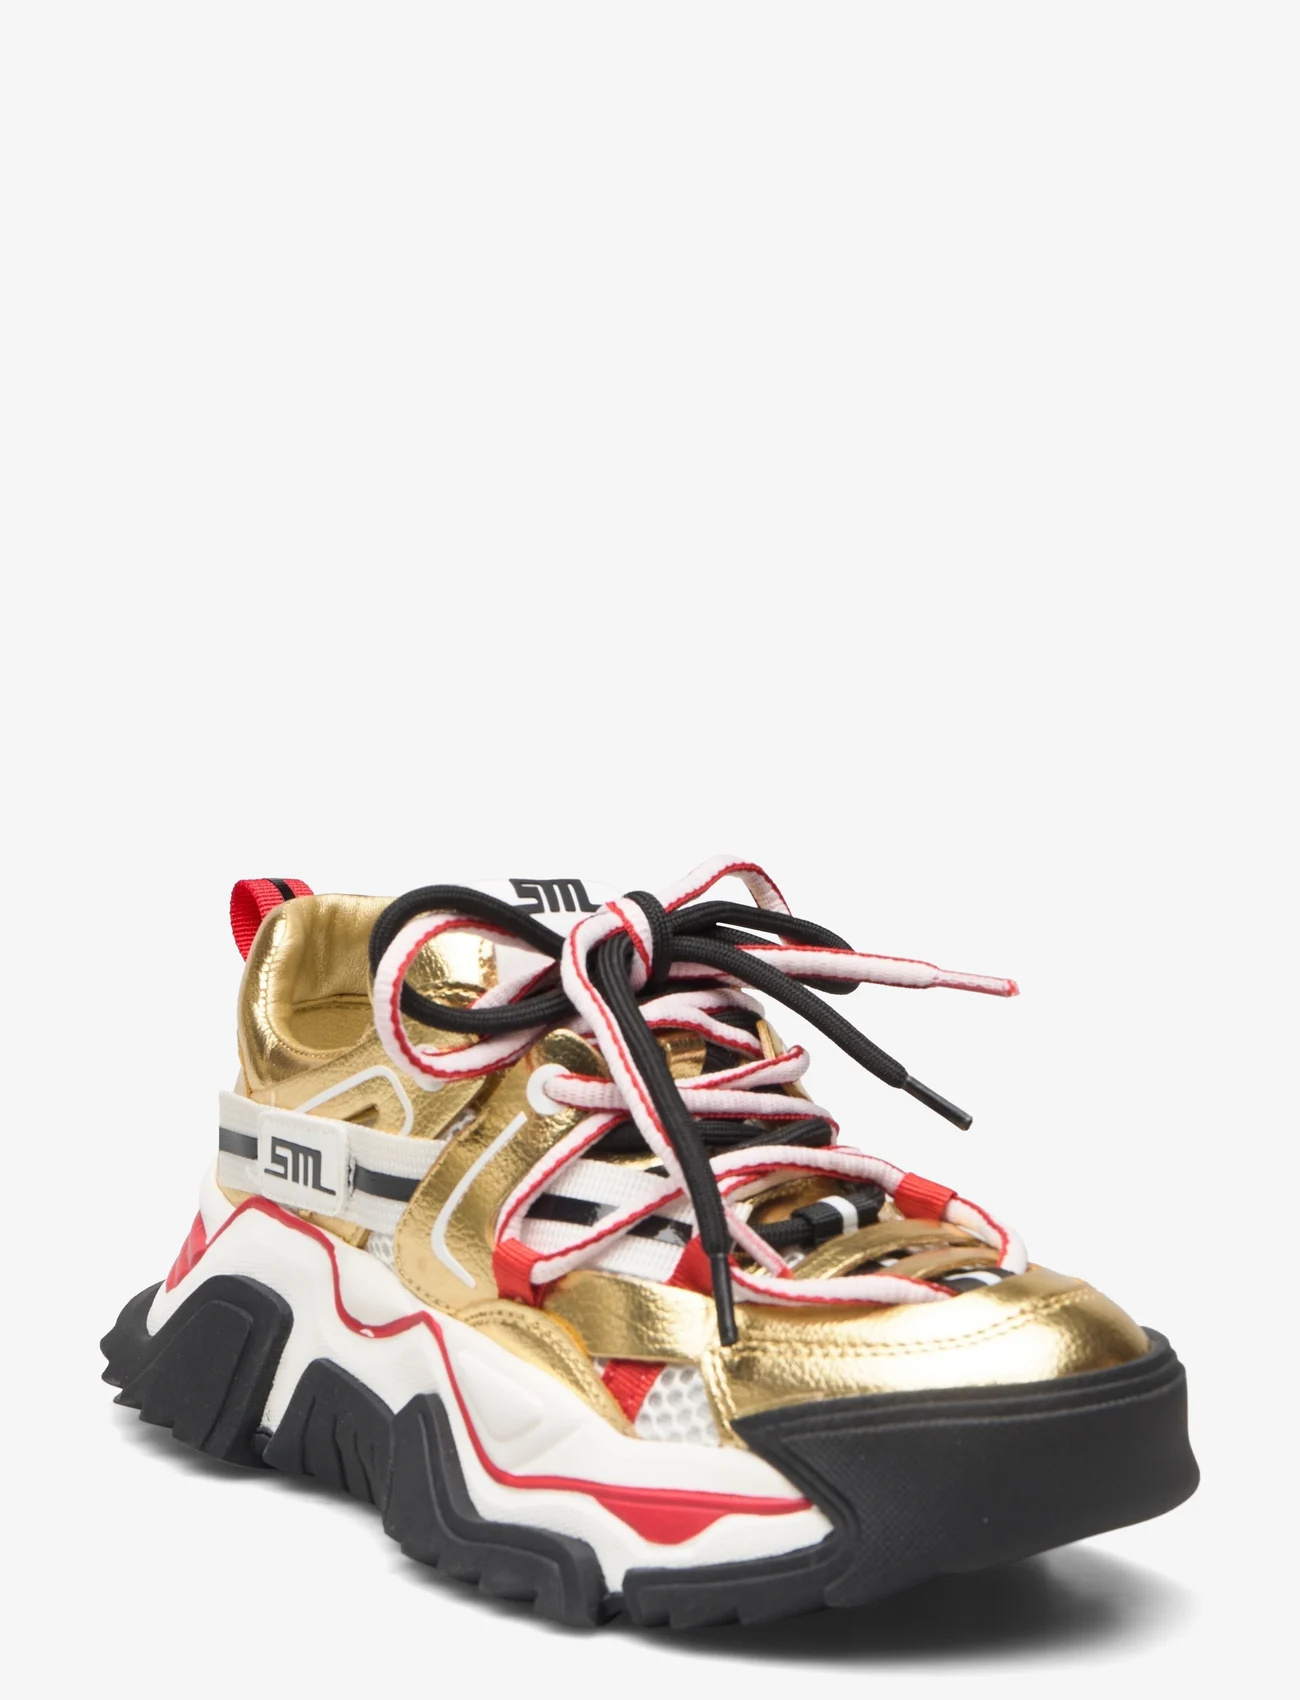 Steve Madden - Kingdom-E Sneaker - laisvalaiko batai storu padu - gold/red - 0